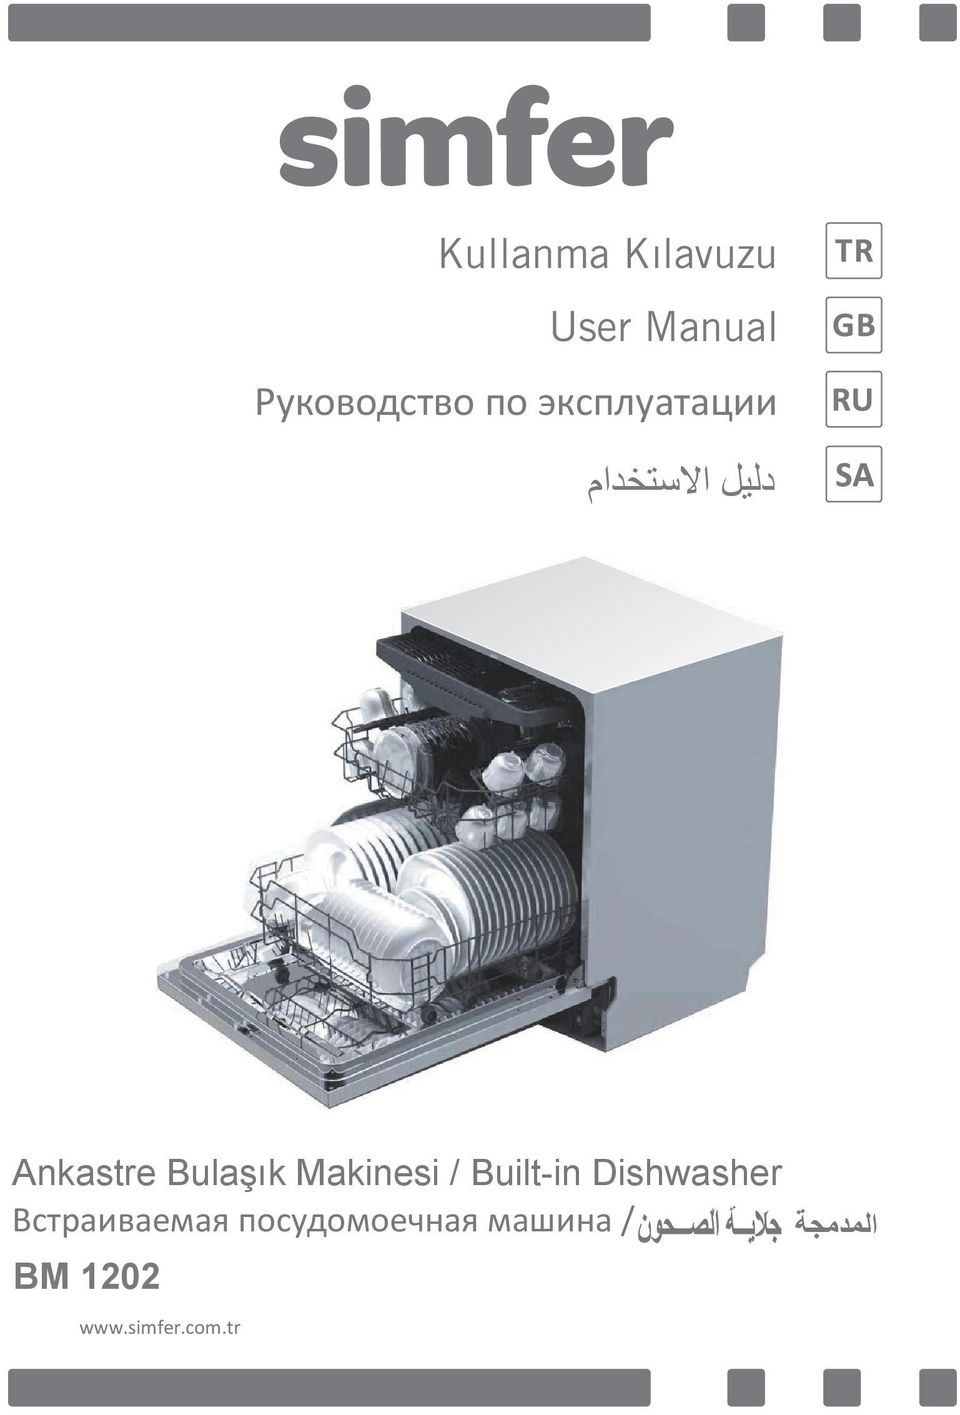 Makinesi / Built-in Dishwasher Встраиваемая